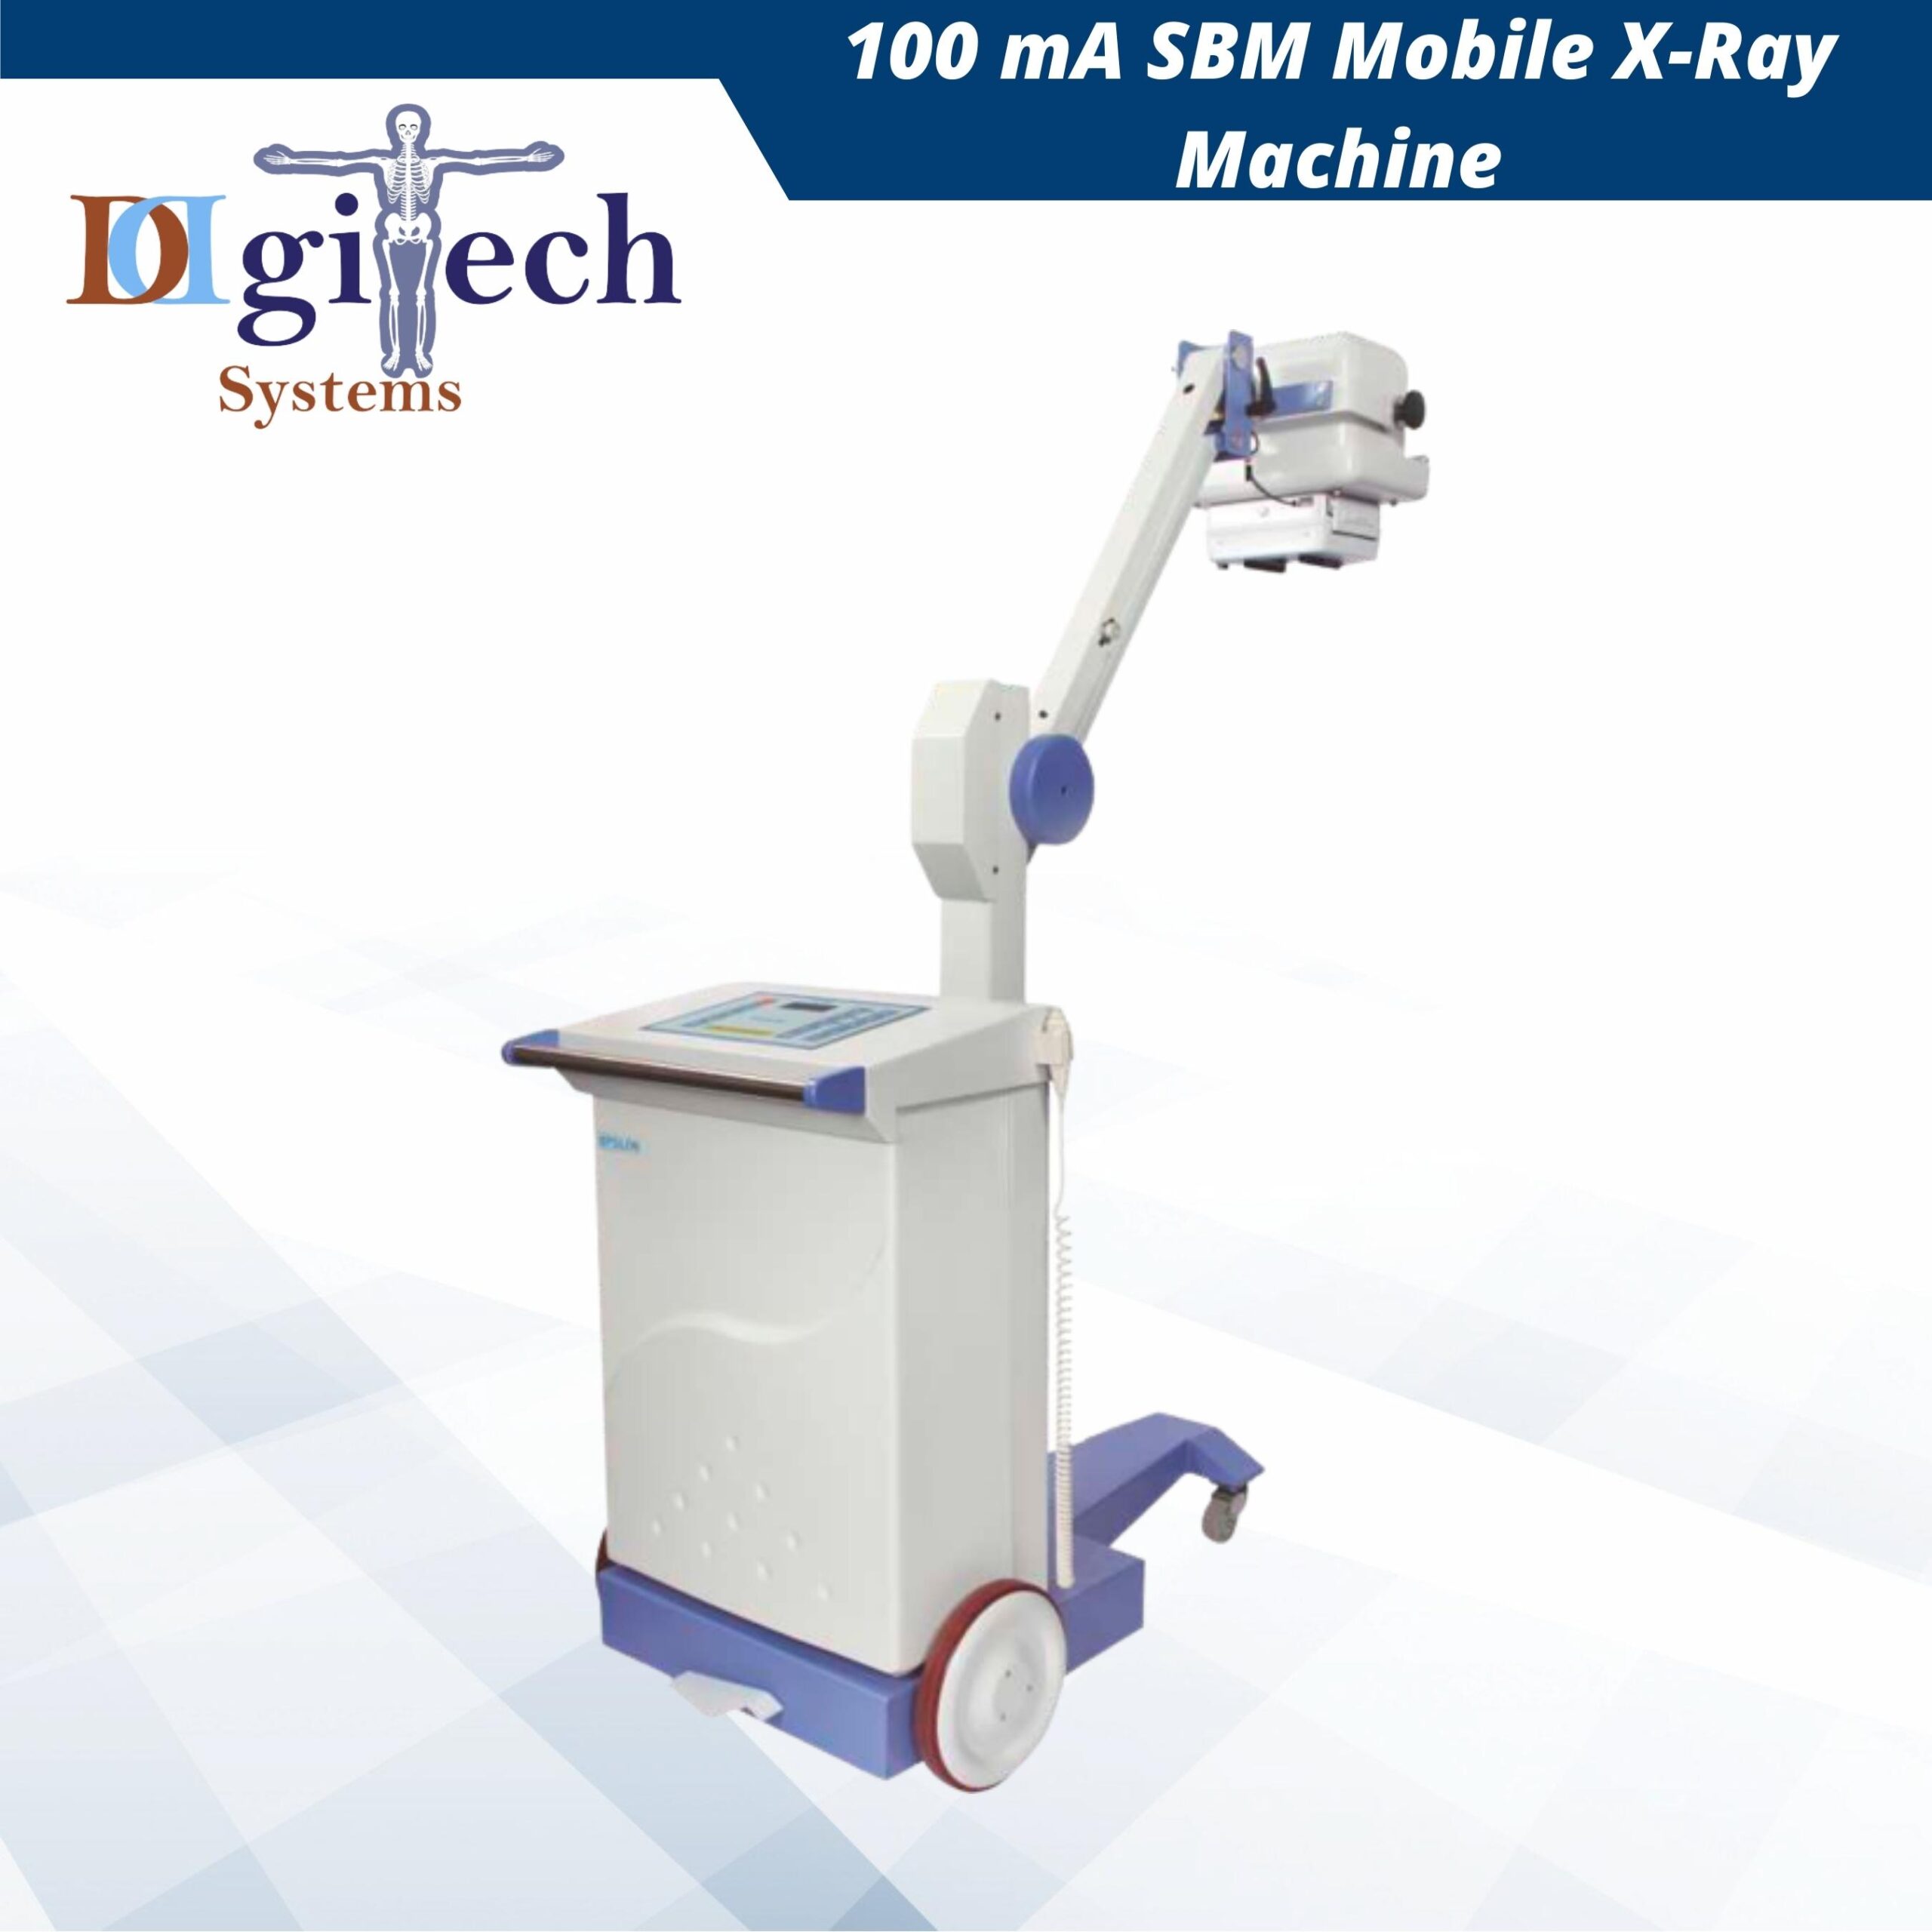 100 mA SBM Mobile X-Ray Machine